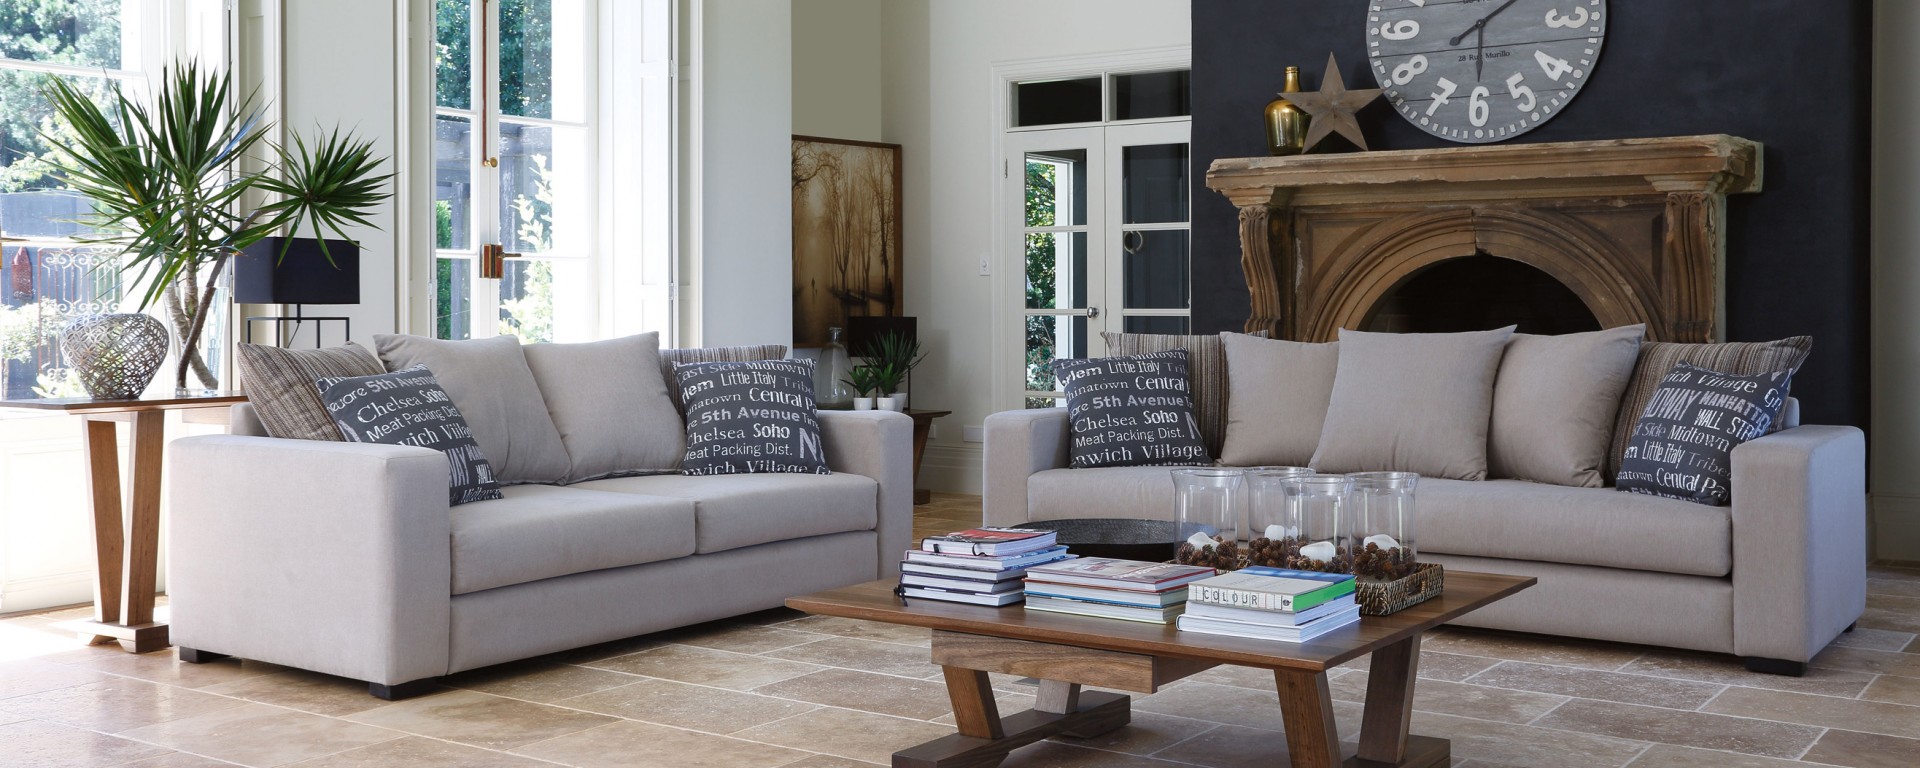 living room furniture harvey norman